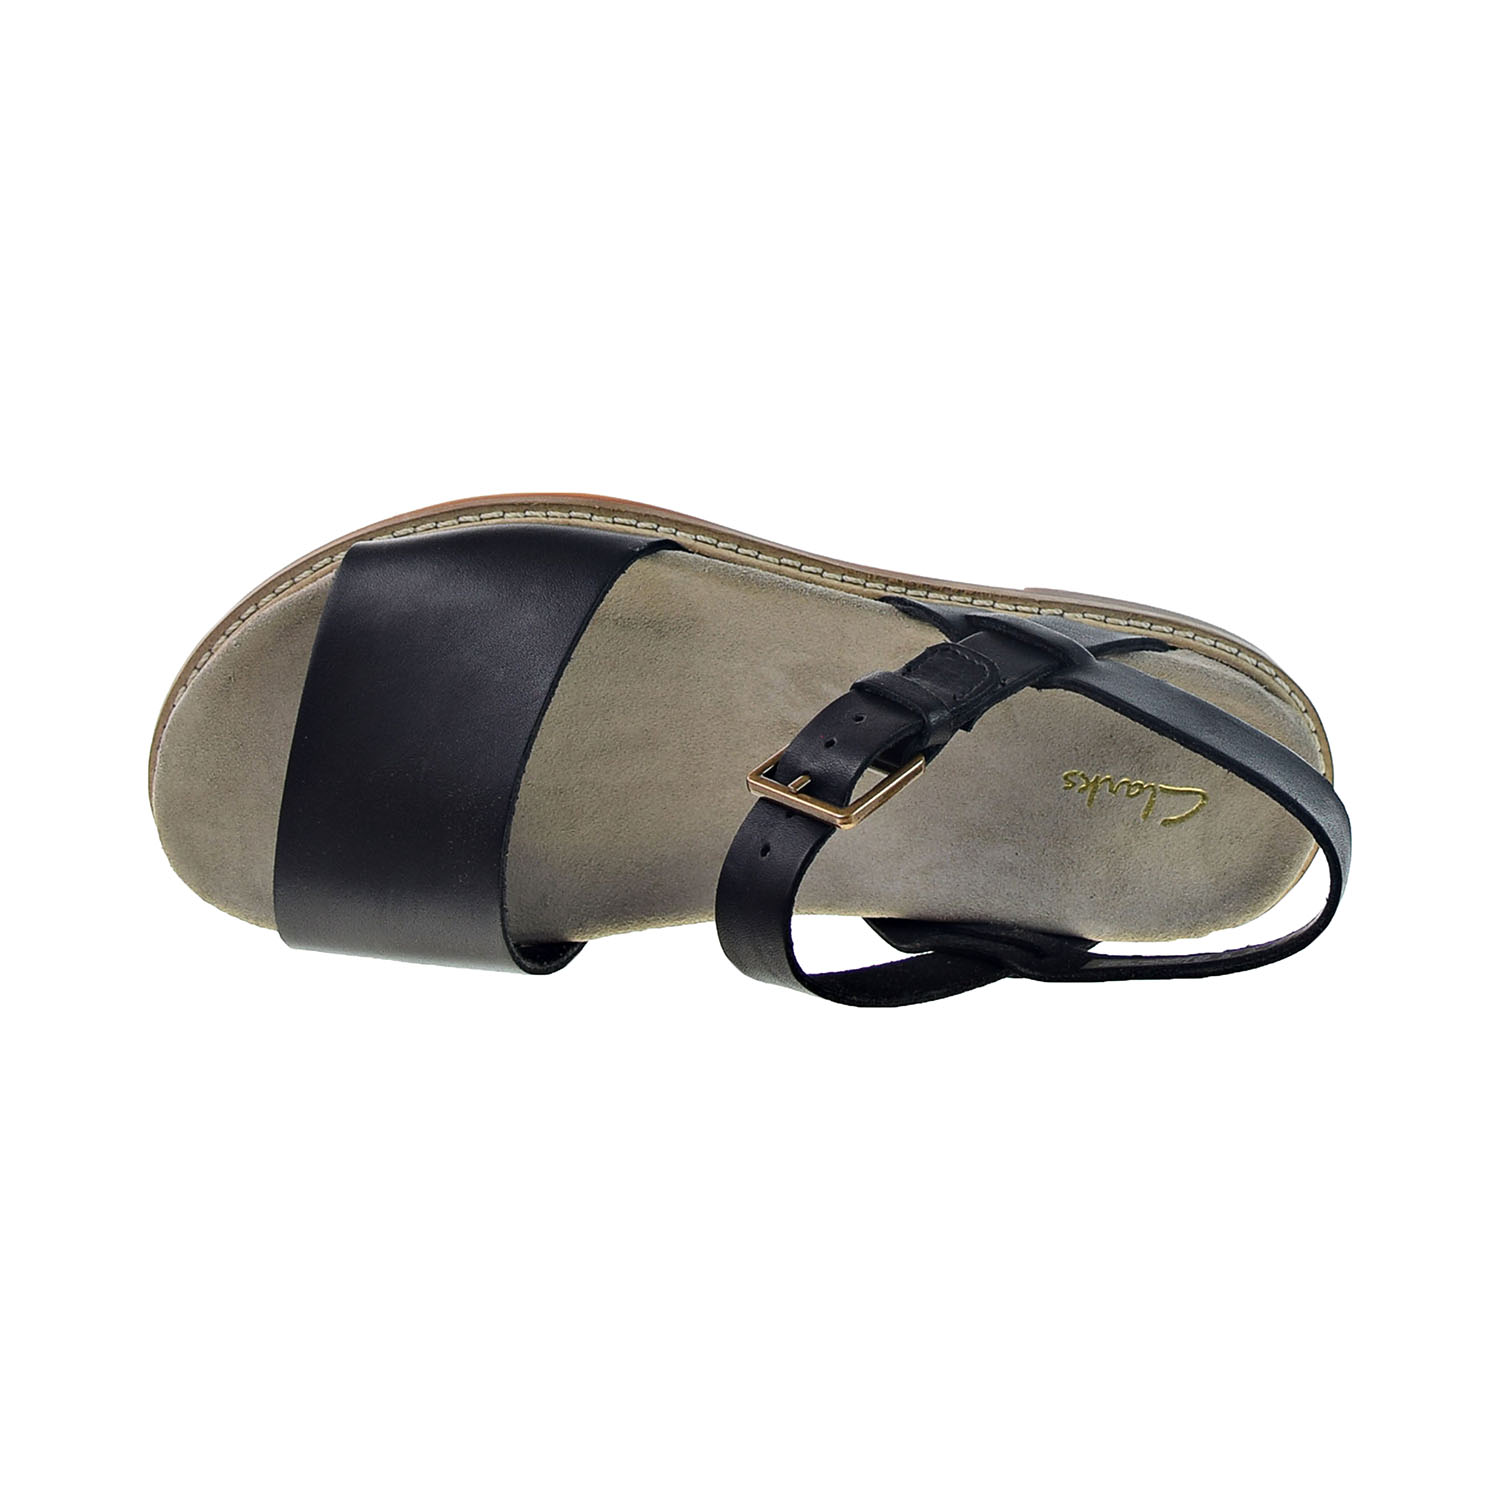 Flat Sandals Black Leather 26152041 